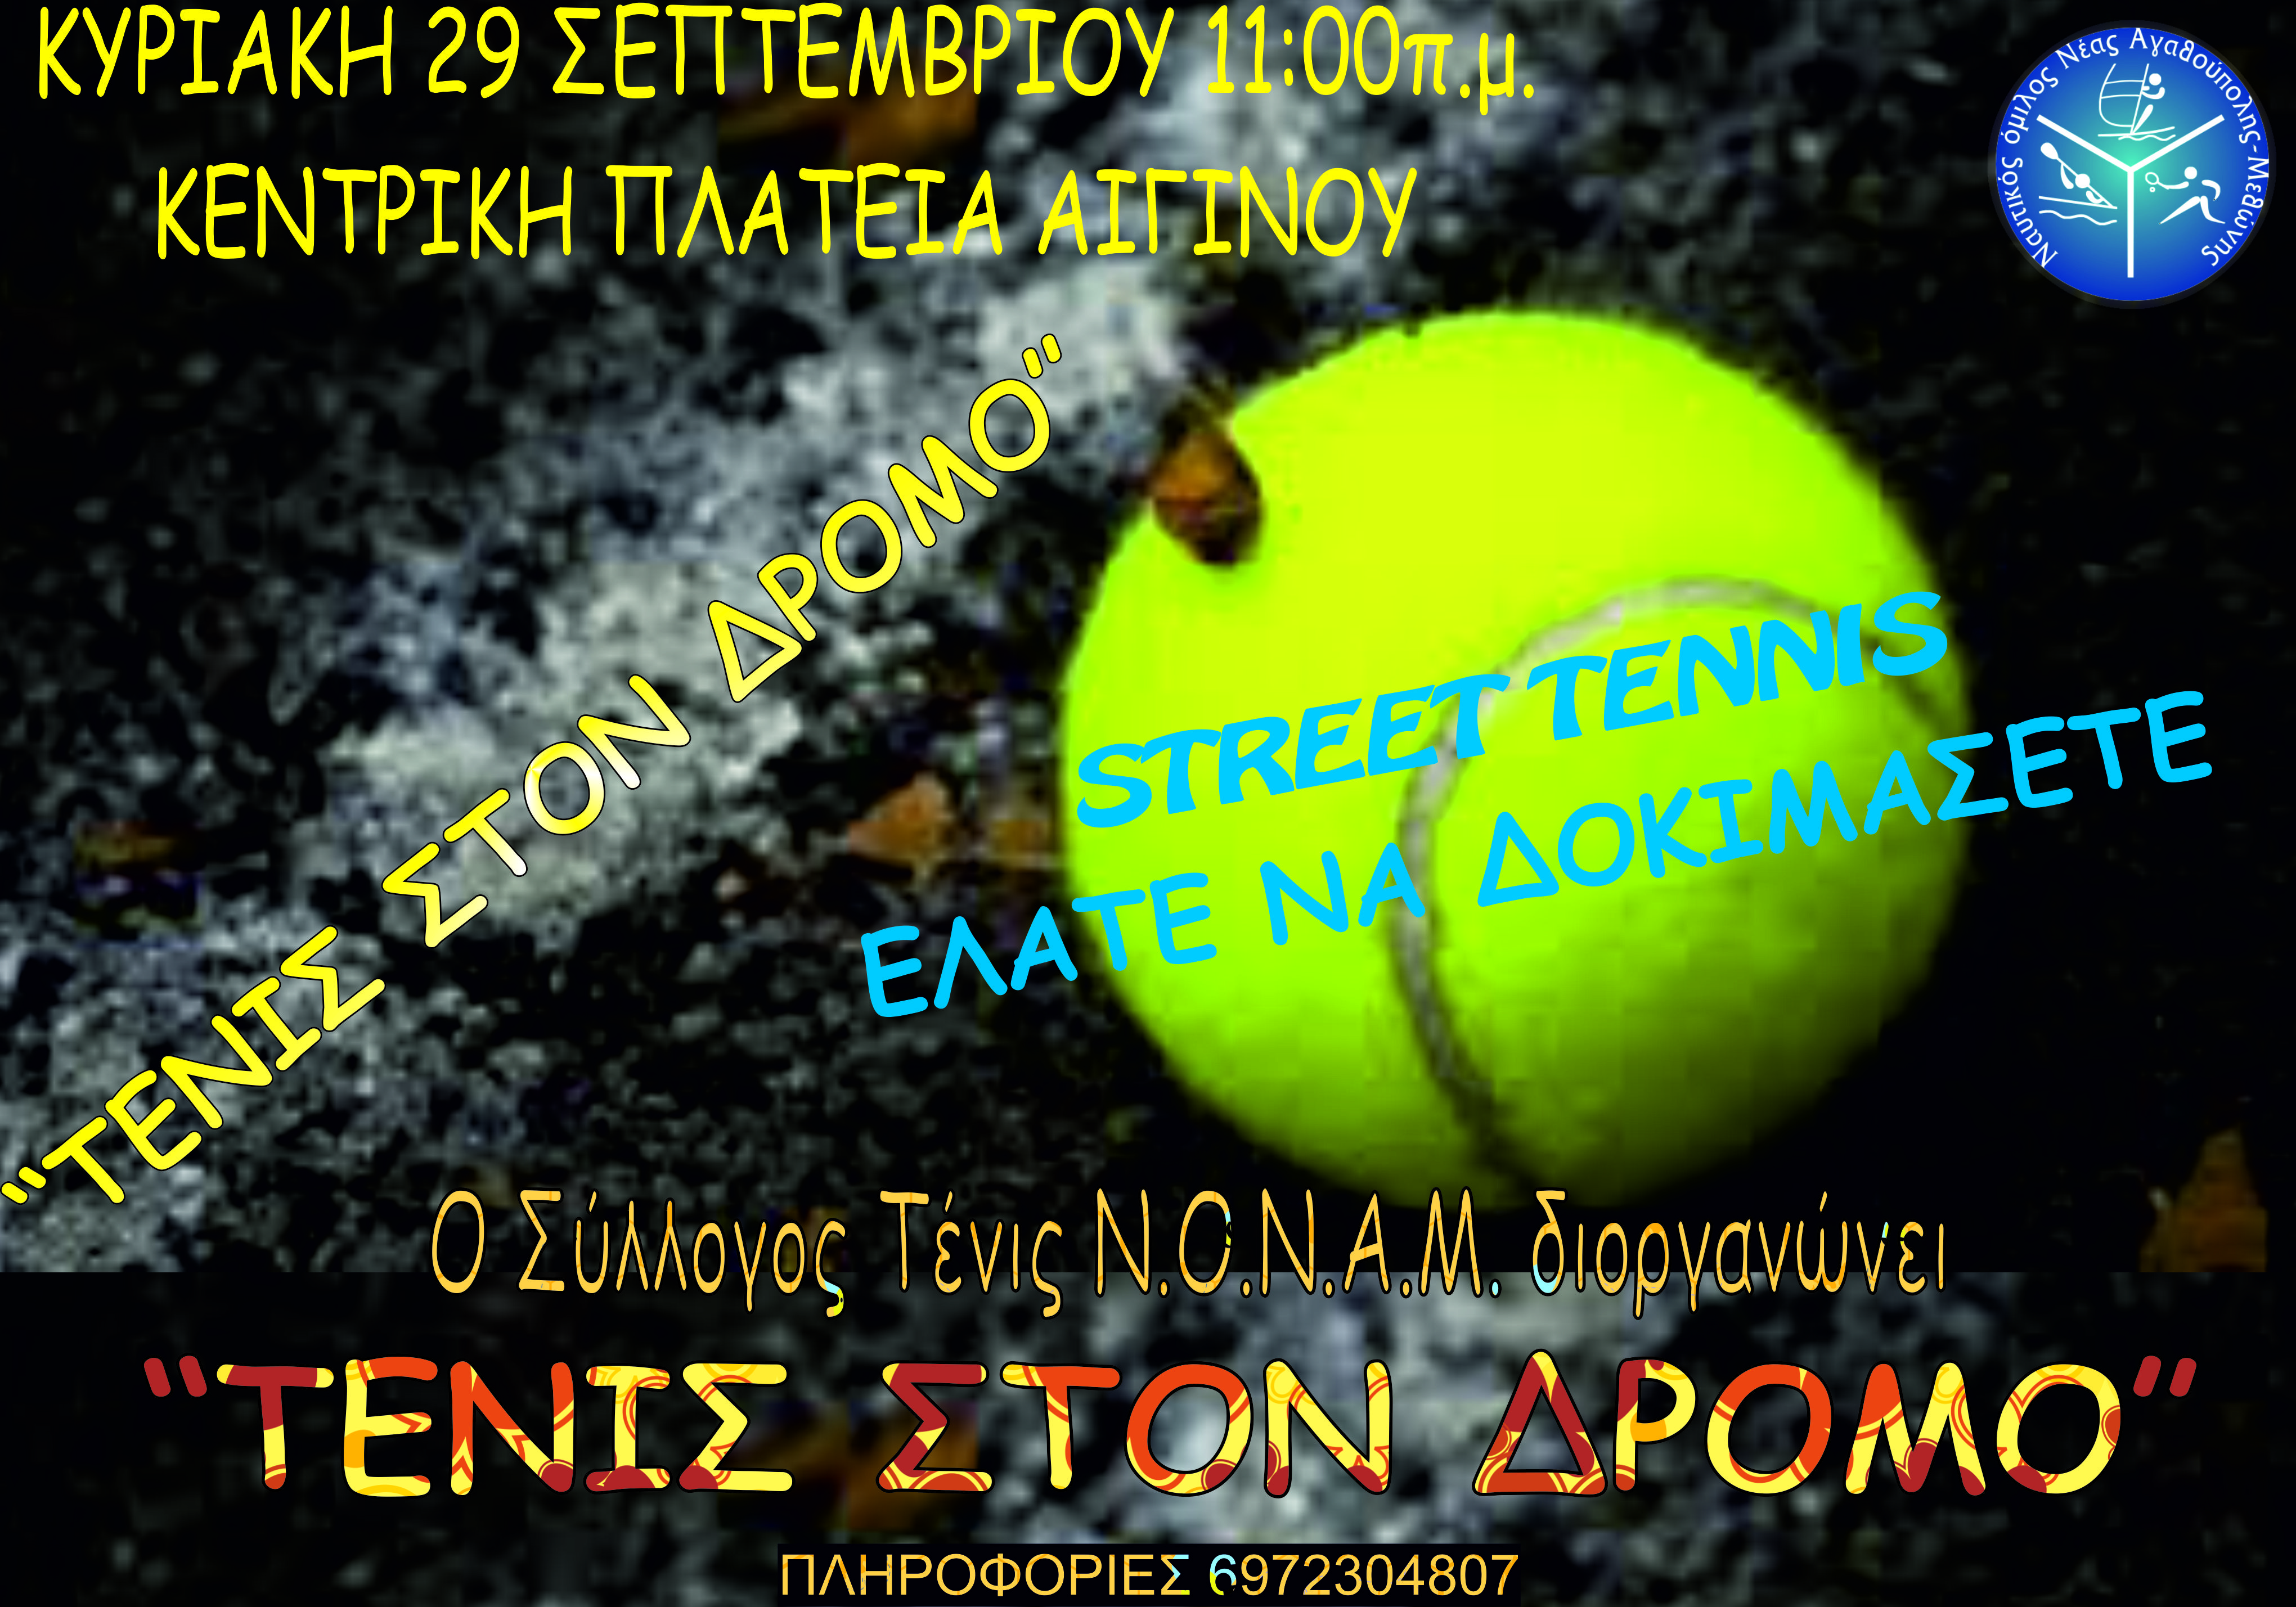 http://noamm.files.wordpress.com/2013/09/street-tennis_ceb1ceb9ceb3ceb9cebdceb9cebf.jpg